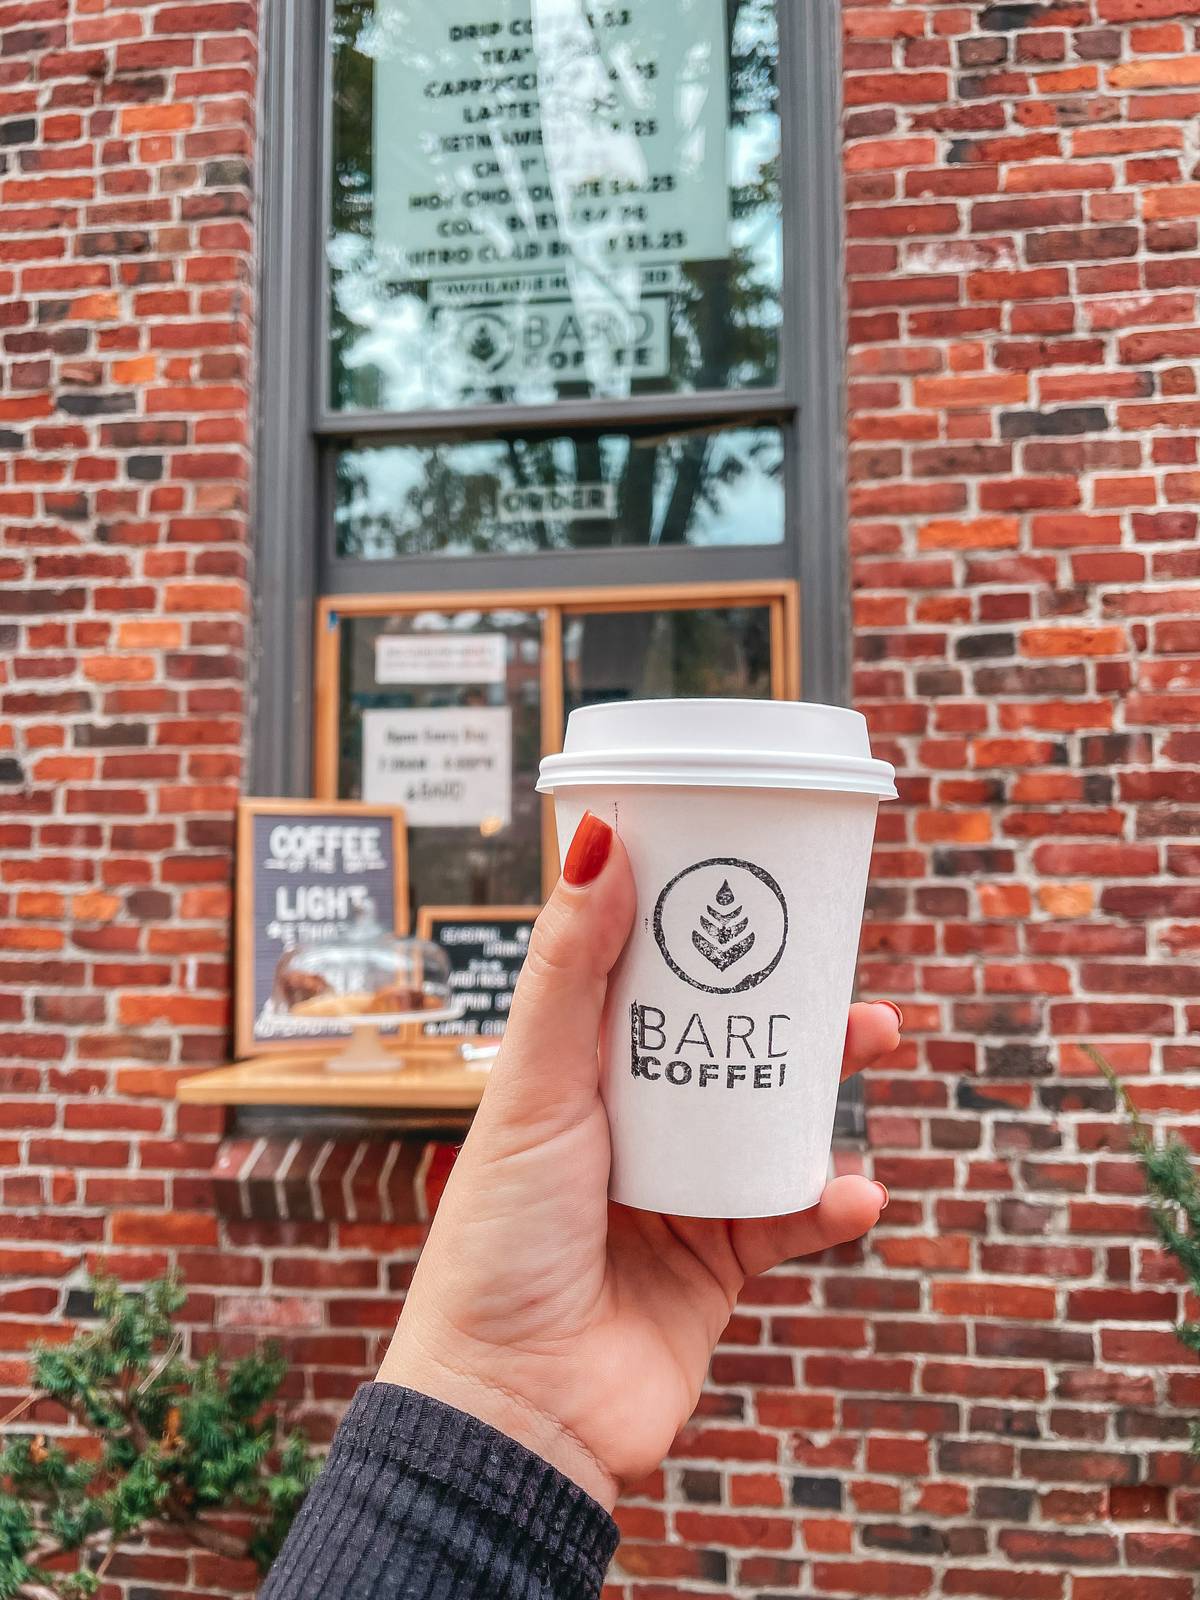 Bard Coffee cappuccino in Portland Maine